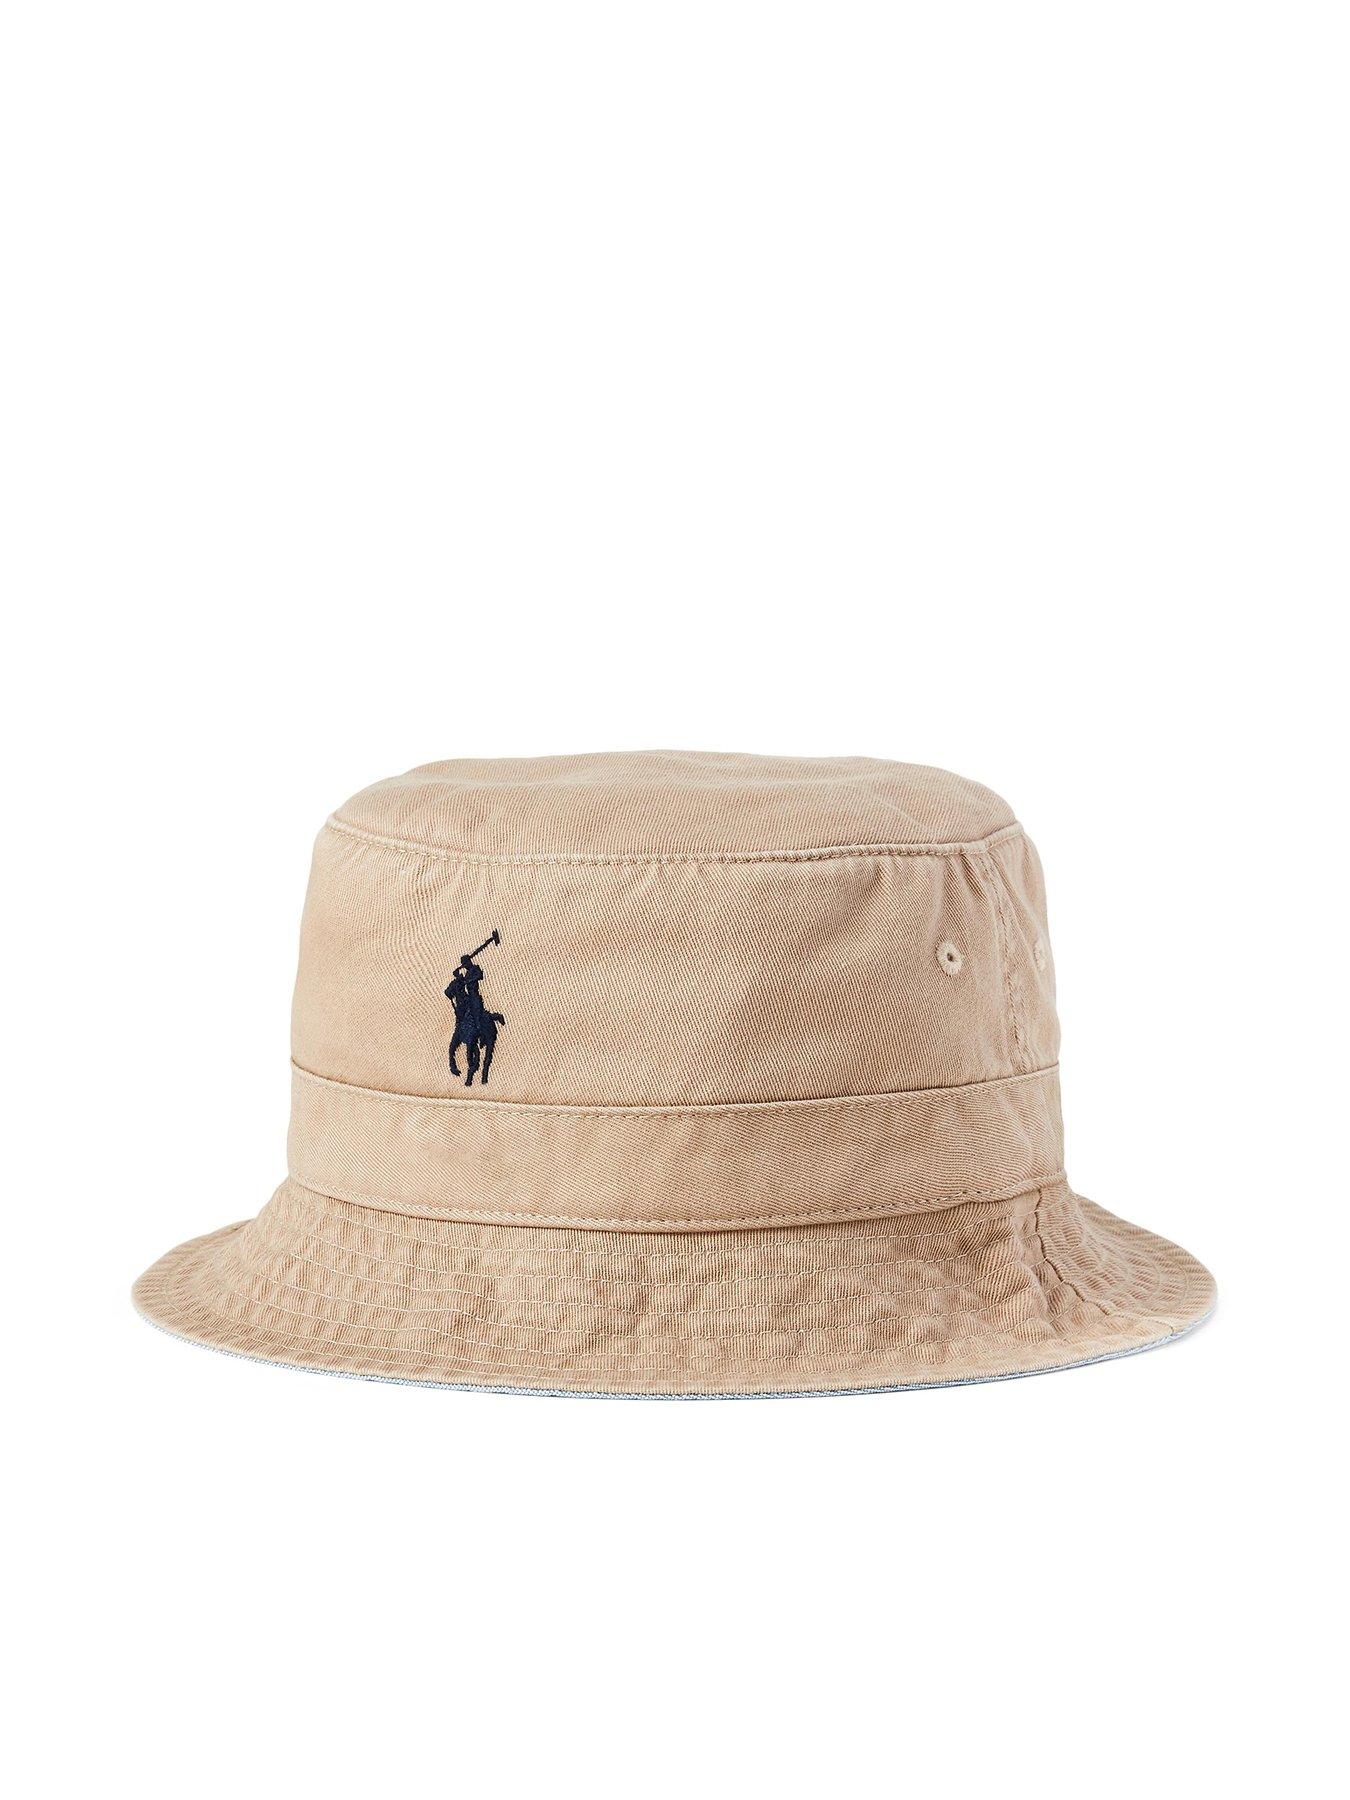 polo sun hat